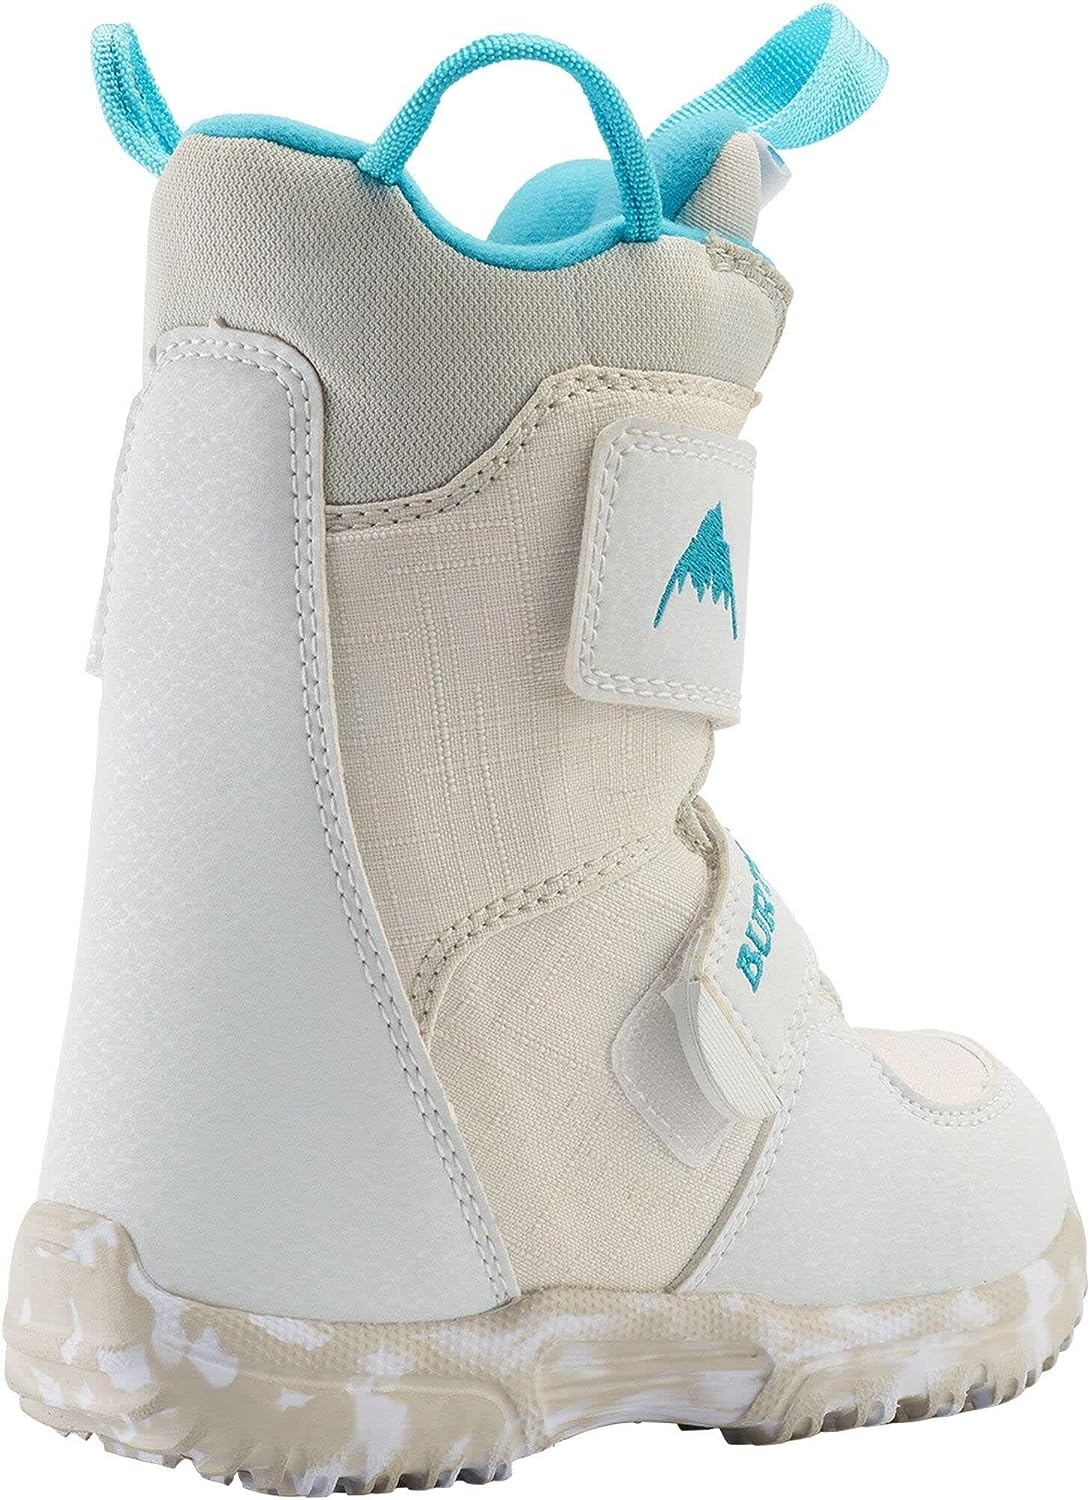 BURTON Burton Toddlers' Mini Grom Snowboard Boots 24